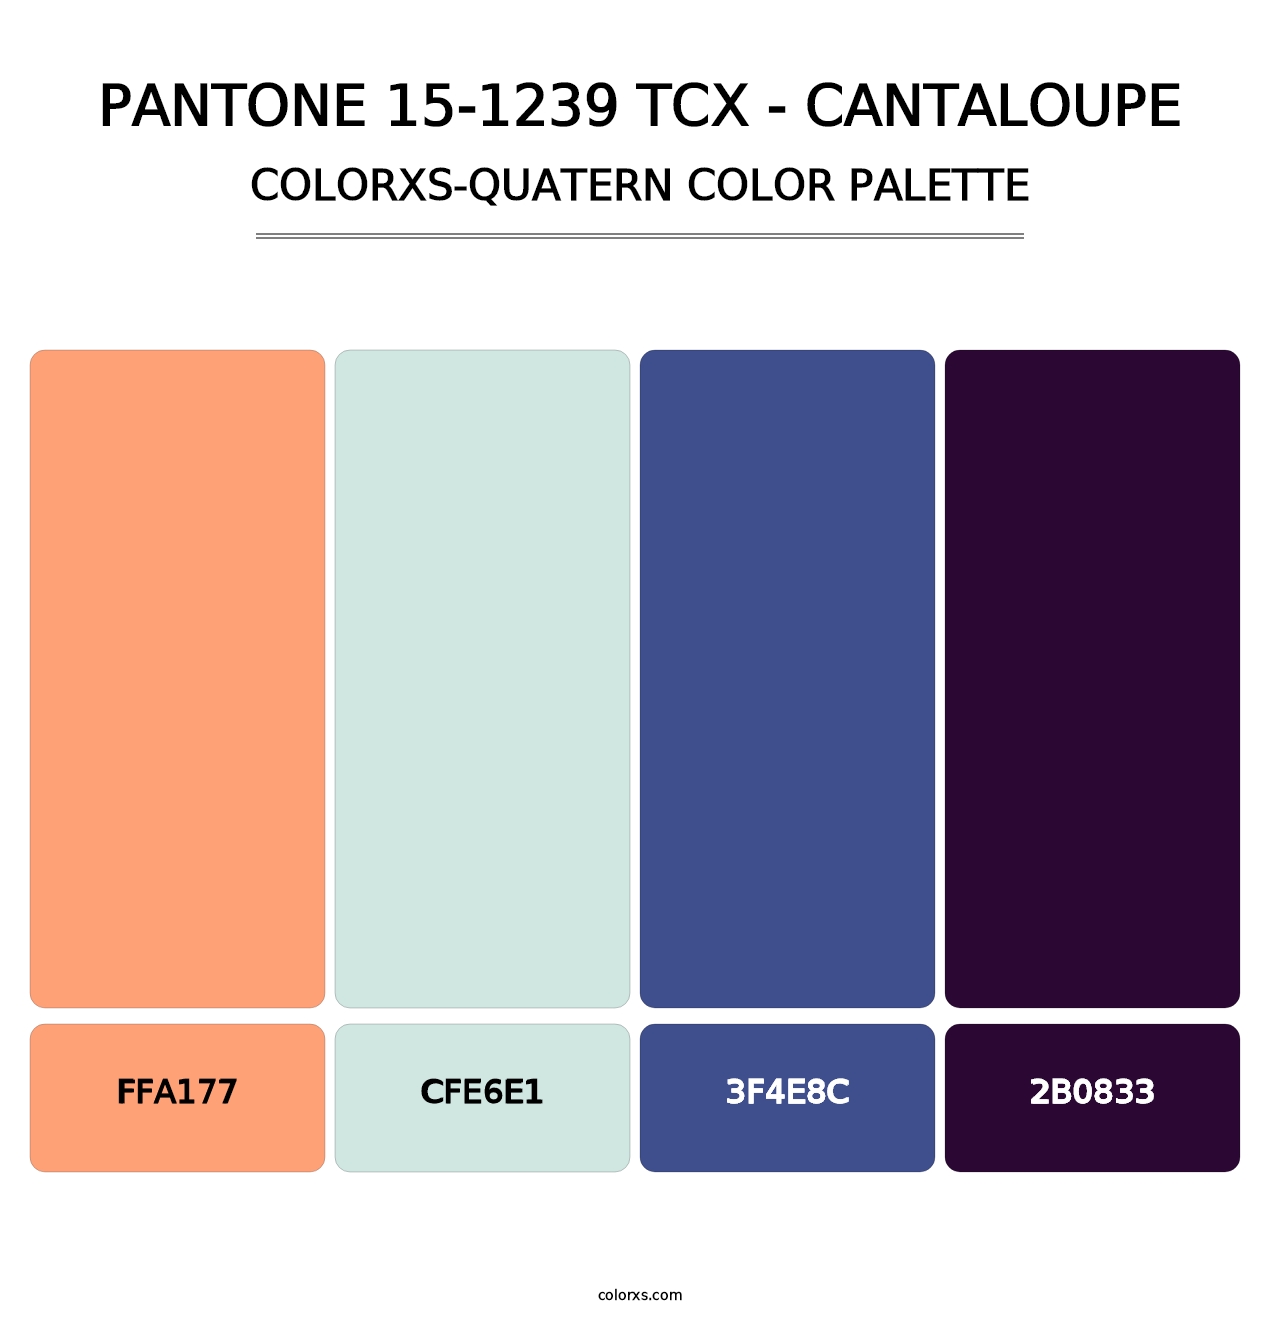 PANTONE 15-1239 TCX - Cantaloupe - Colorxs Quatern Palette